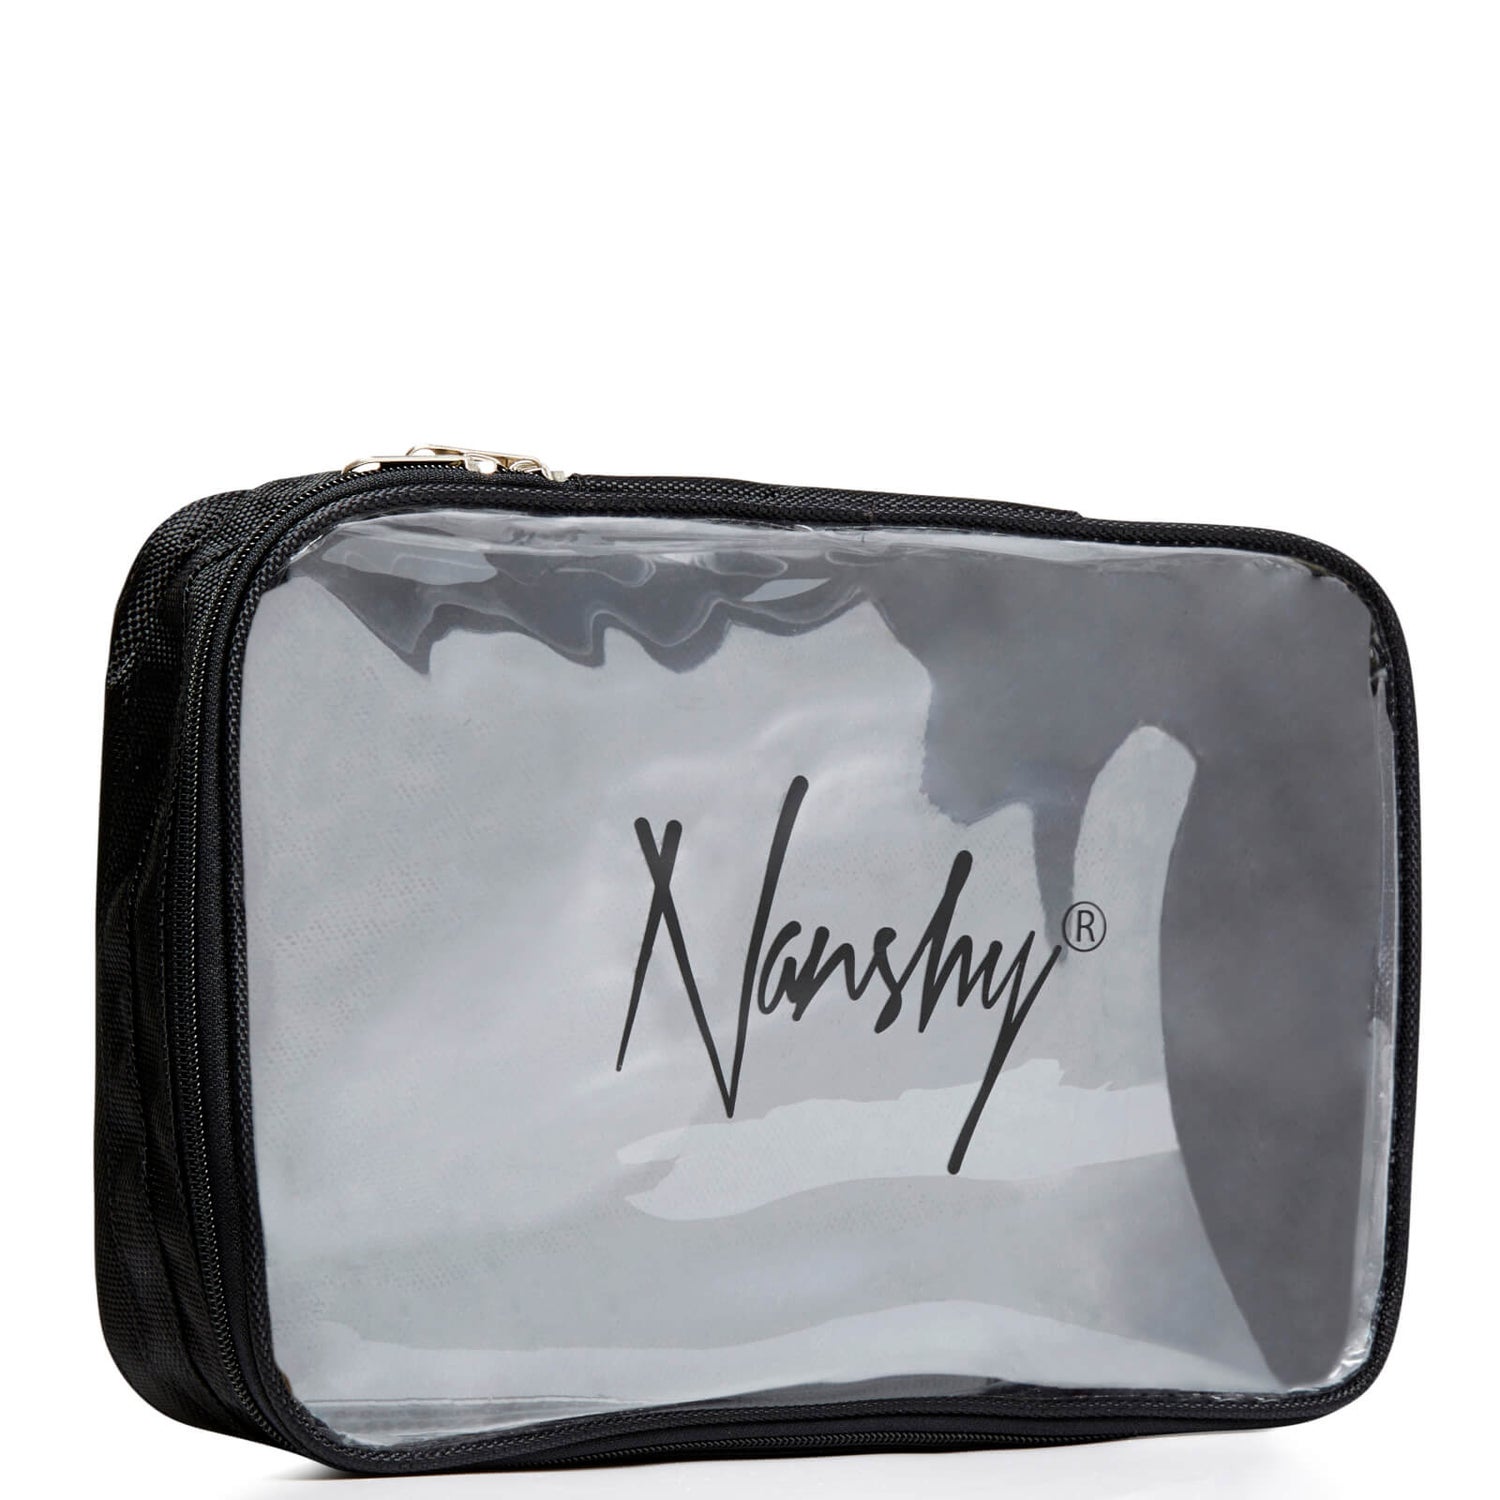 Nanshy Travel Organiser Bag